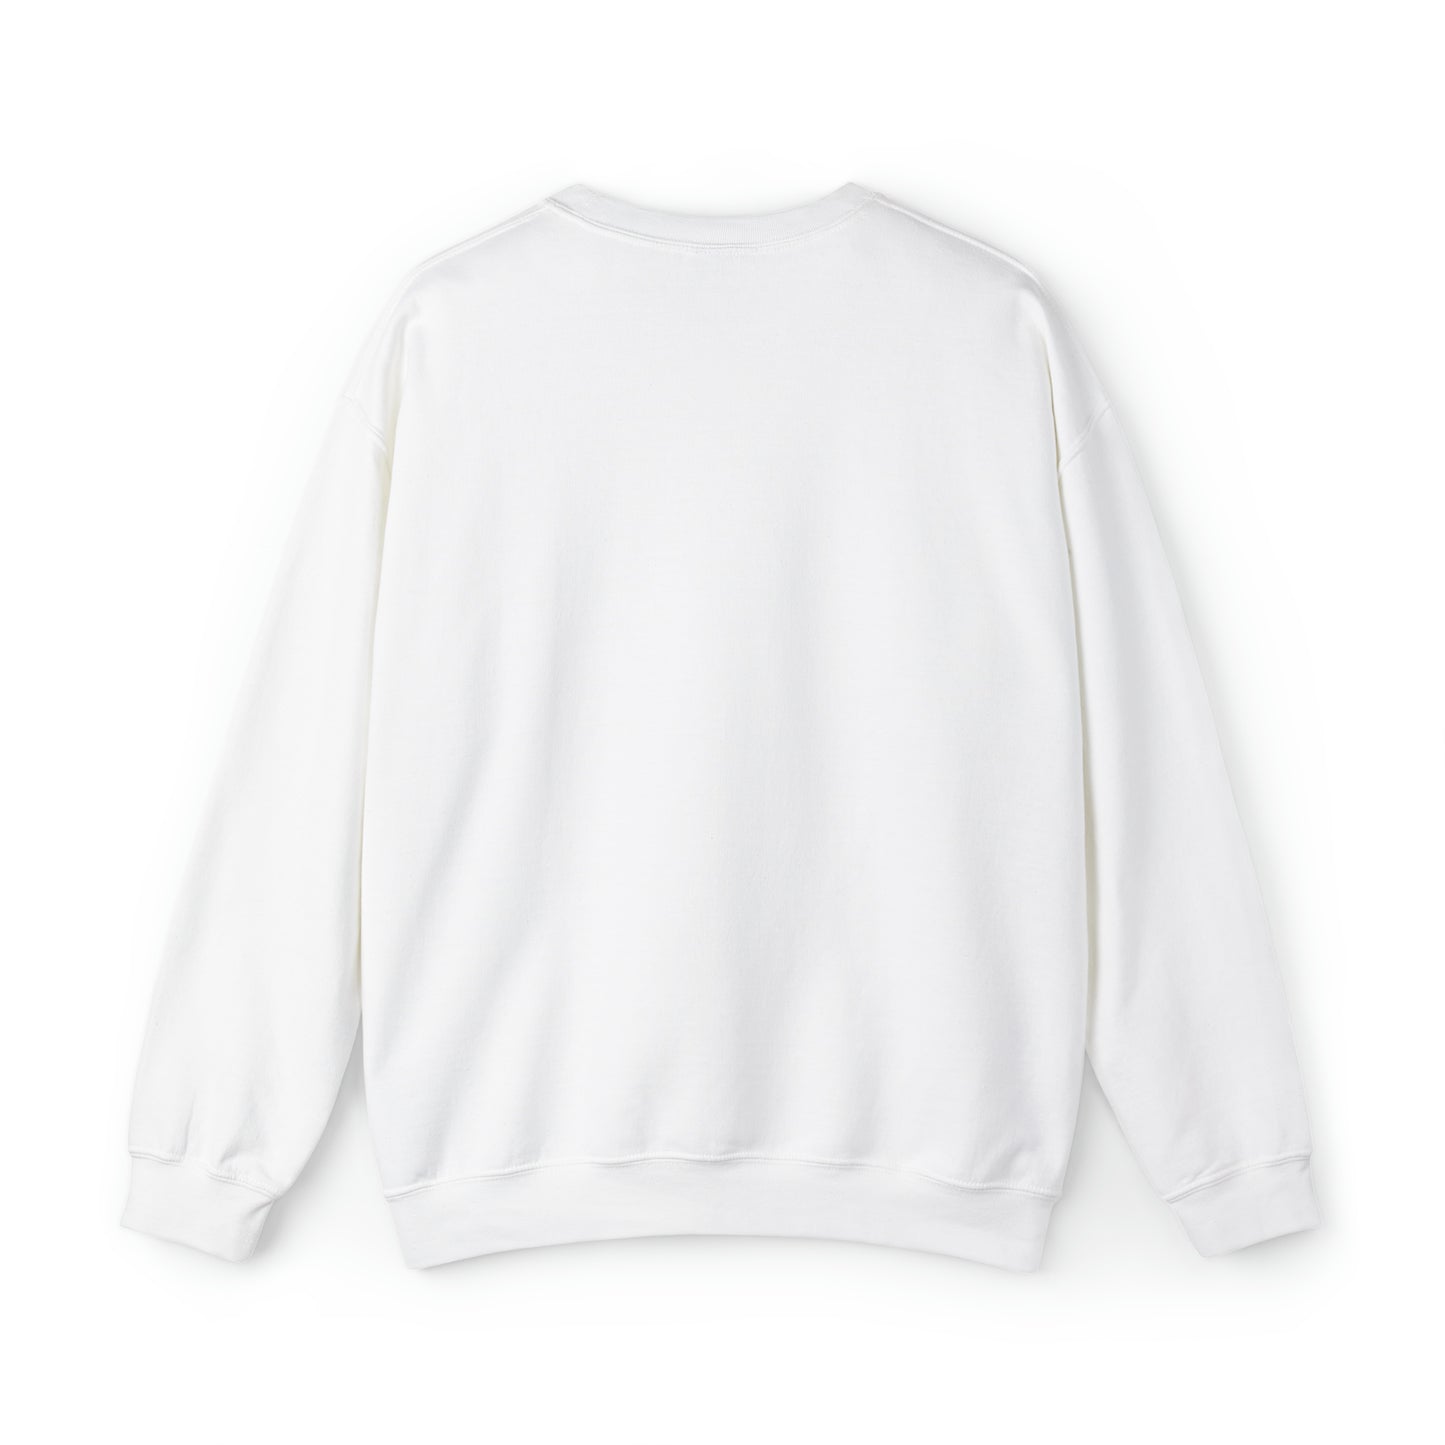 Thick-Fil-A Sweatshirt